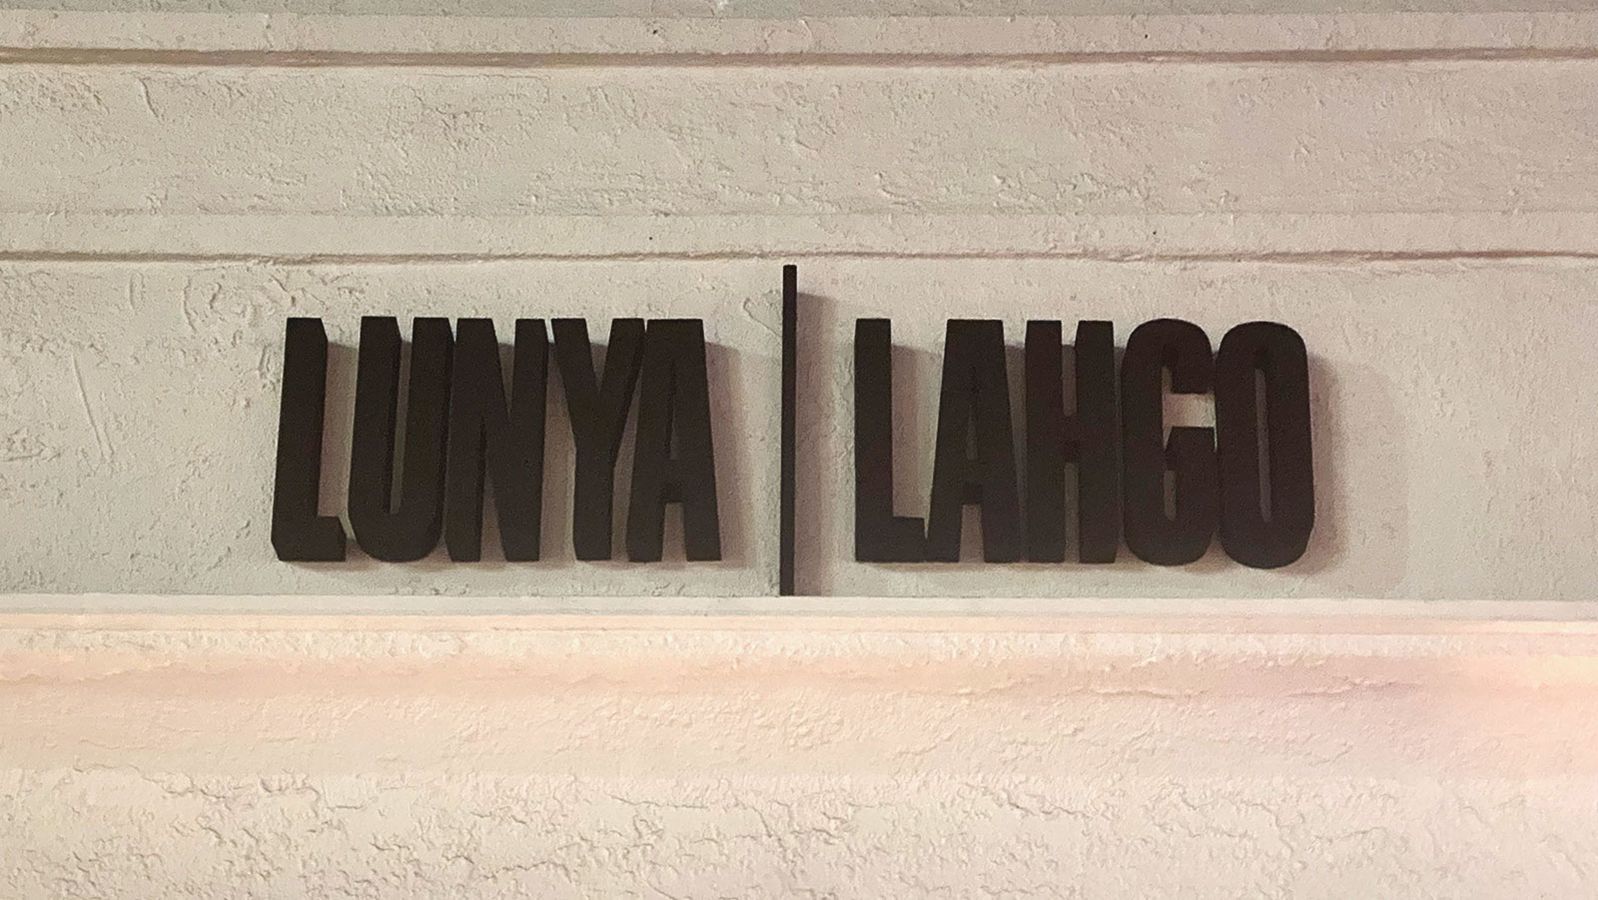 Lunya Lahgo building sign